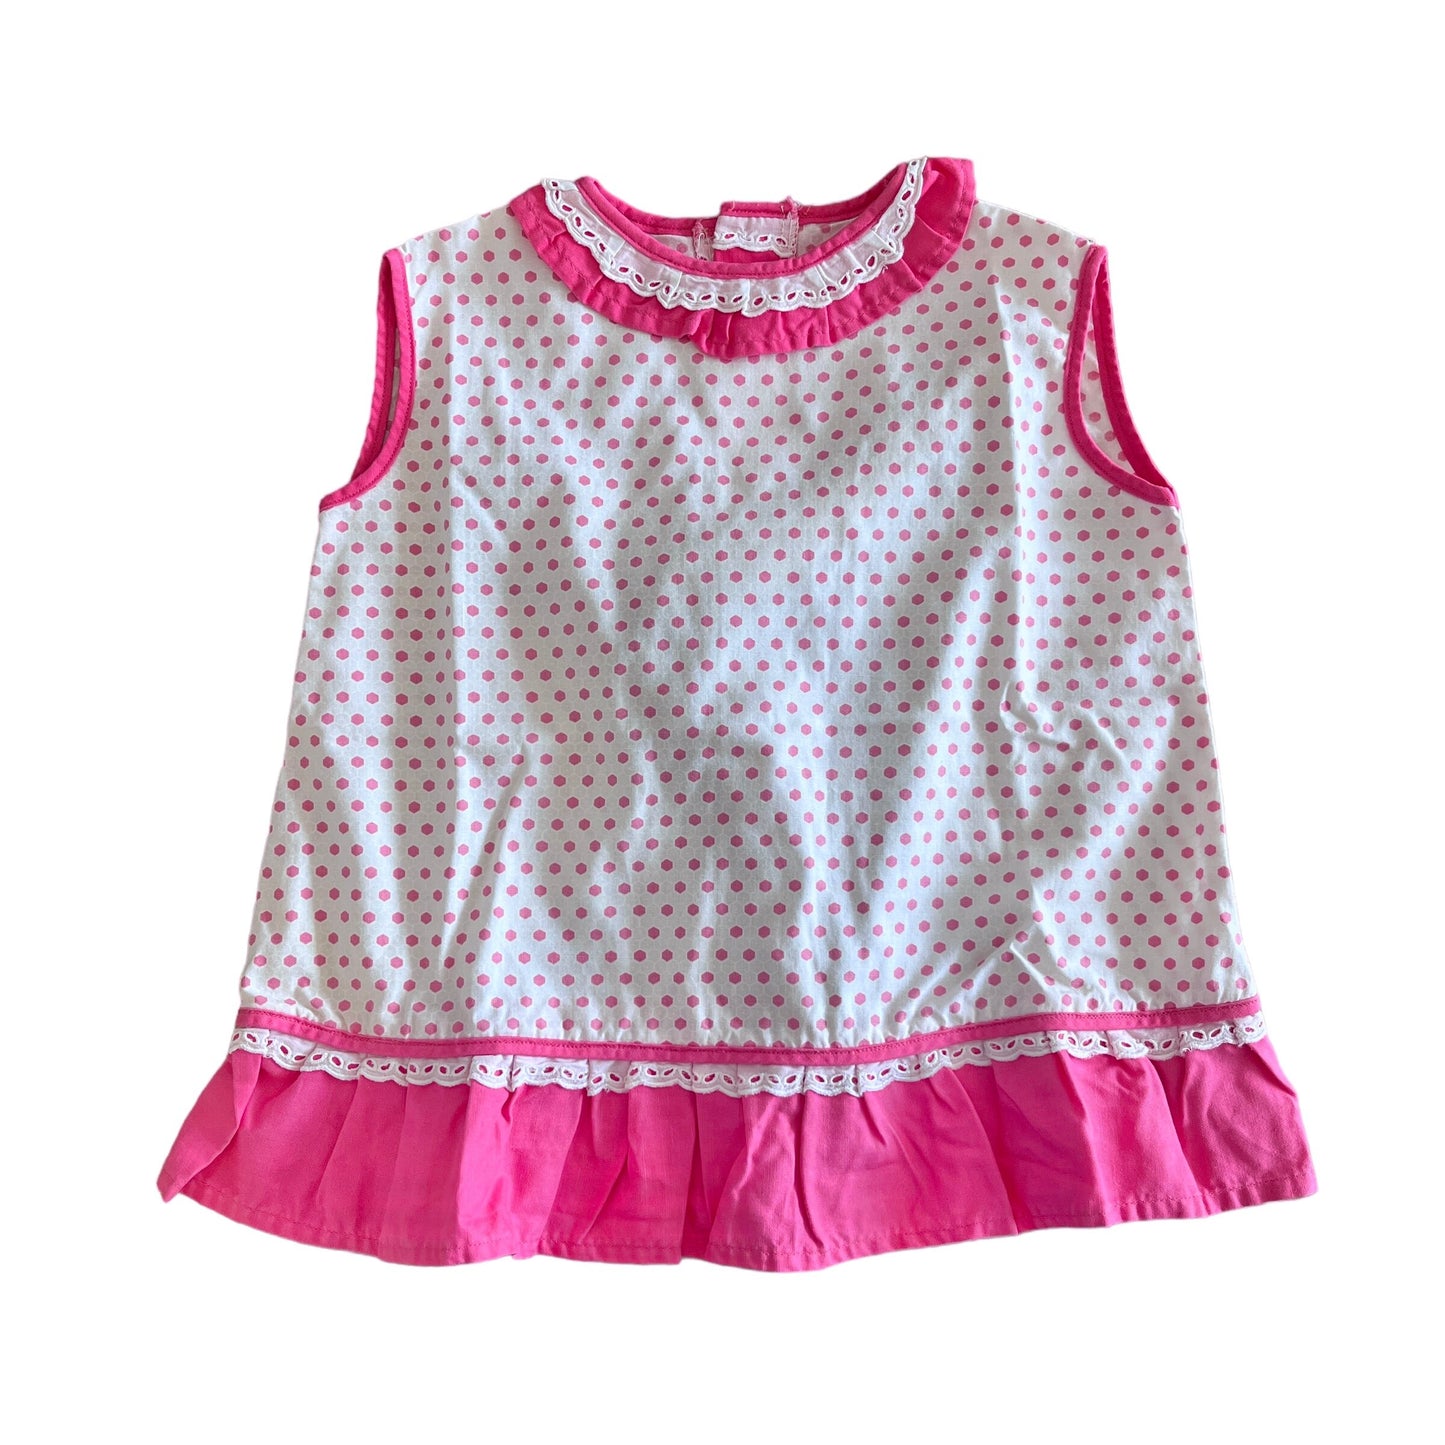 Vintage 1960s Pink Dots Mod Dress 9-12M